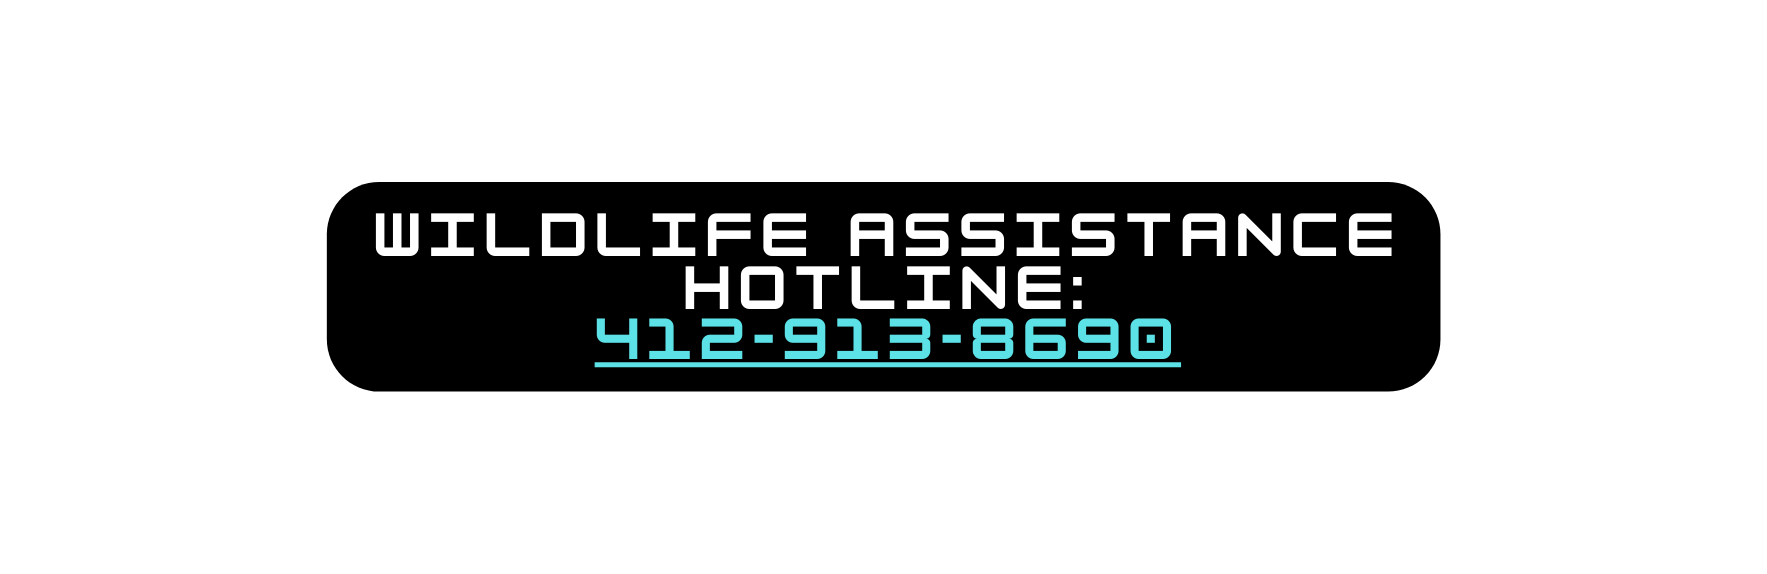 Wildlife Assistance Hotline 412 913 8690